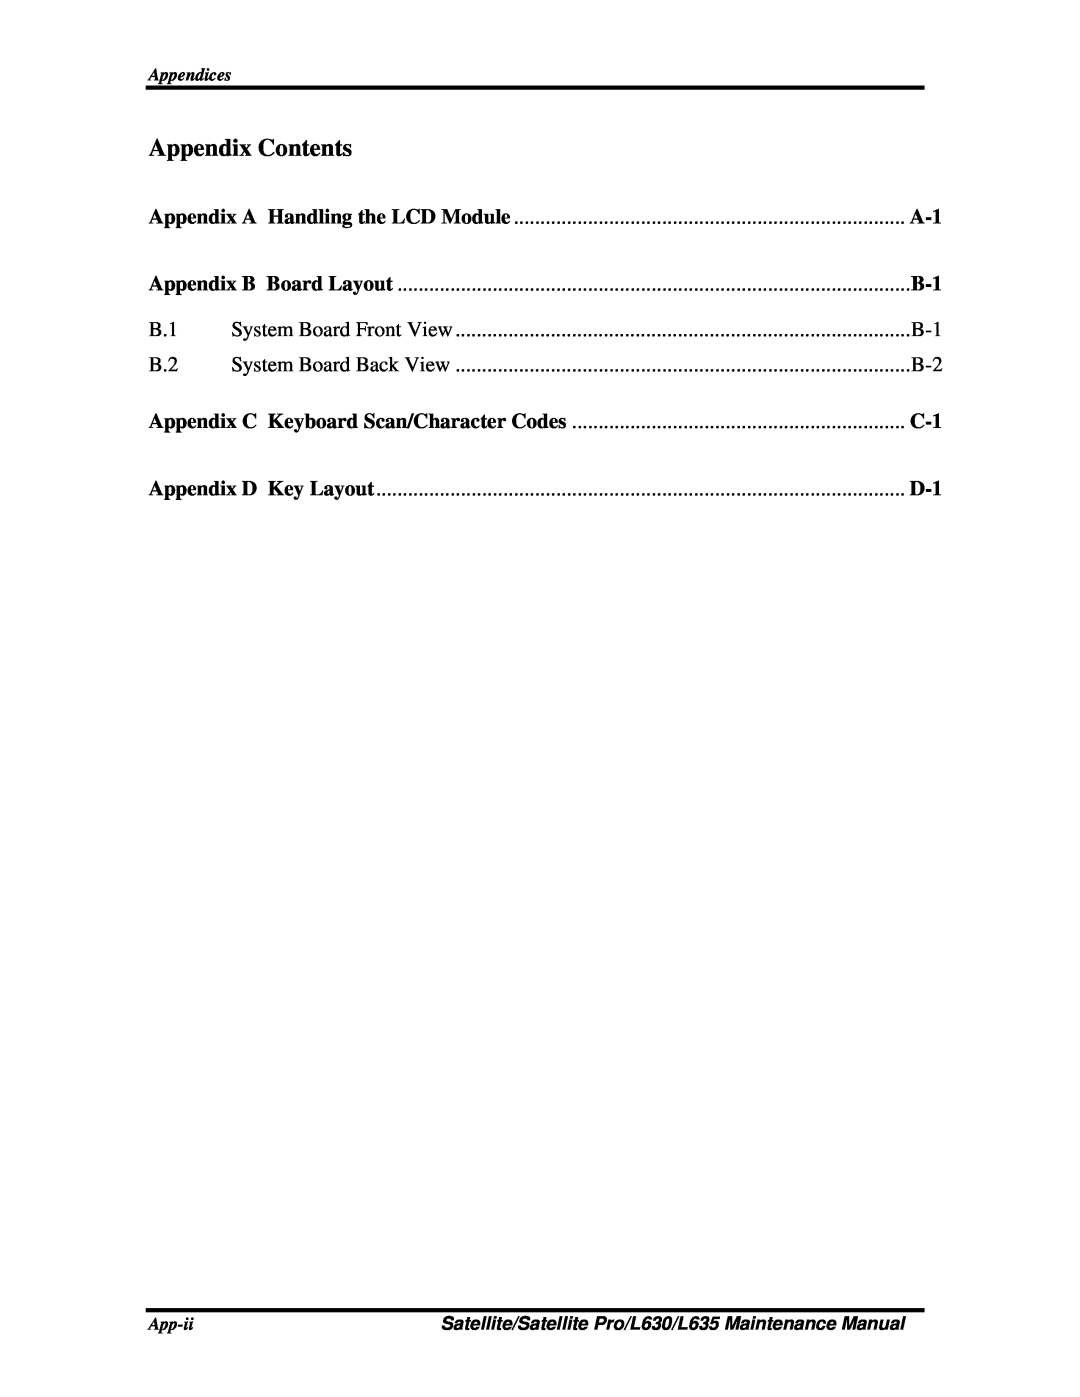 Toshiba manual Appendix Contents, Satellite/Satellite Pro/L630/L635 Maintenance Manual 